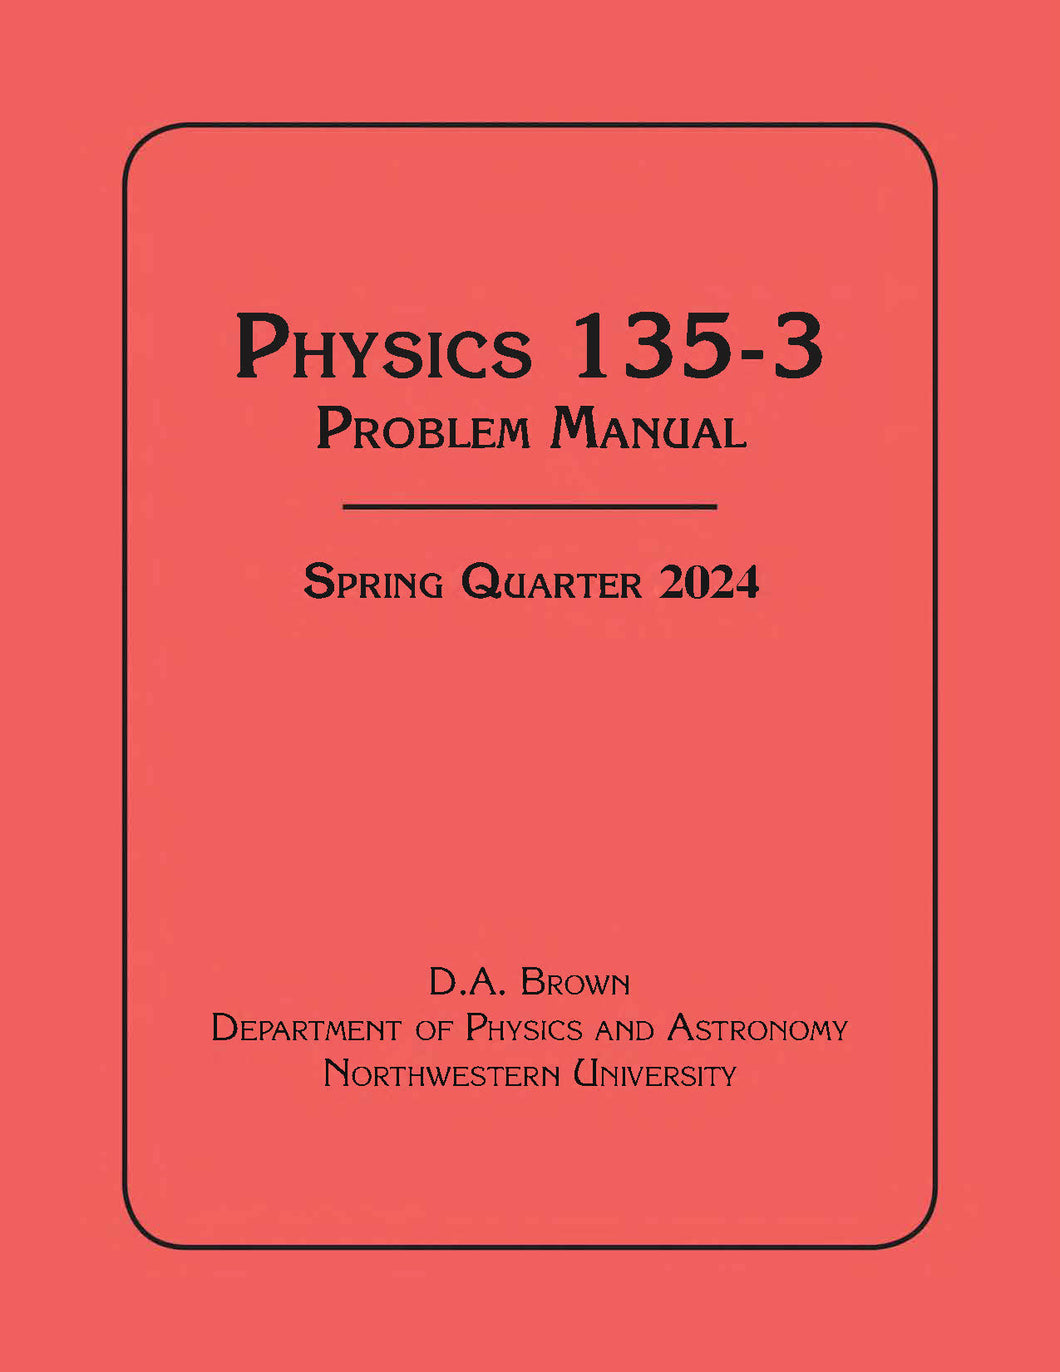 NWU Physics 135-3 Problem Manual, Spring Quarter 2024